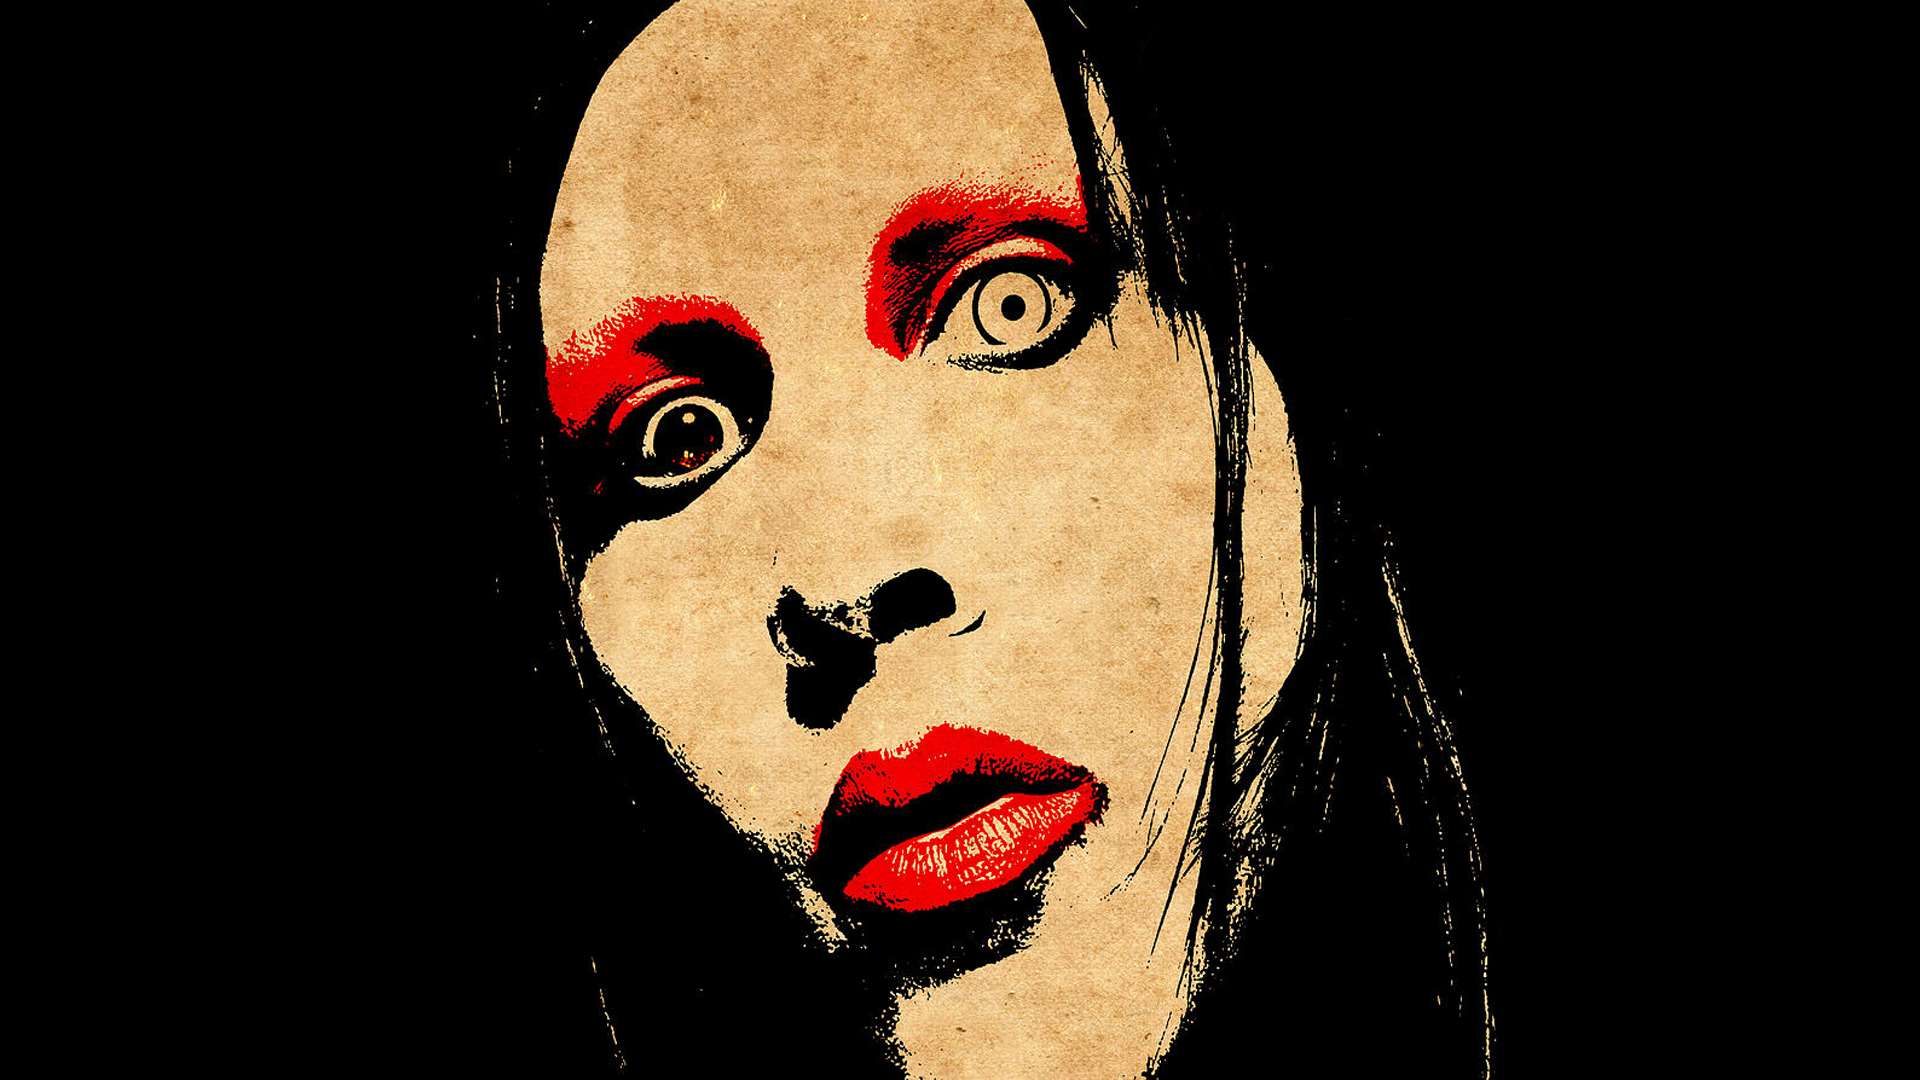 Marilyn Manson Music Face Shock Rock Industrial Alternative Metal Rock Music Hard Rock Singer Altern 1920x1080